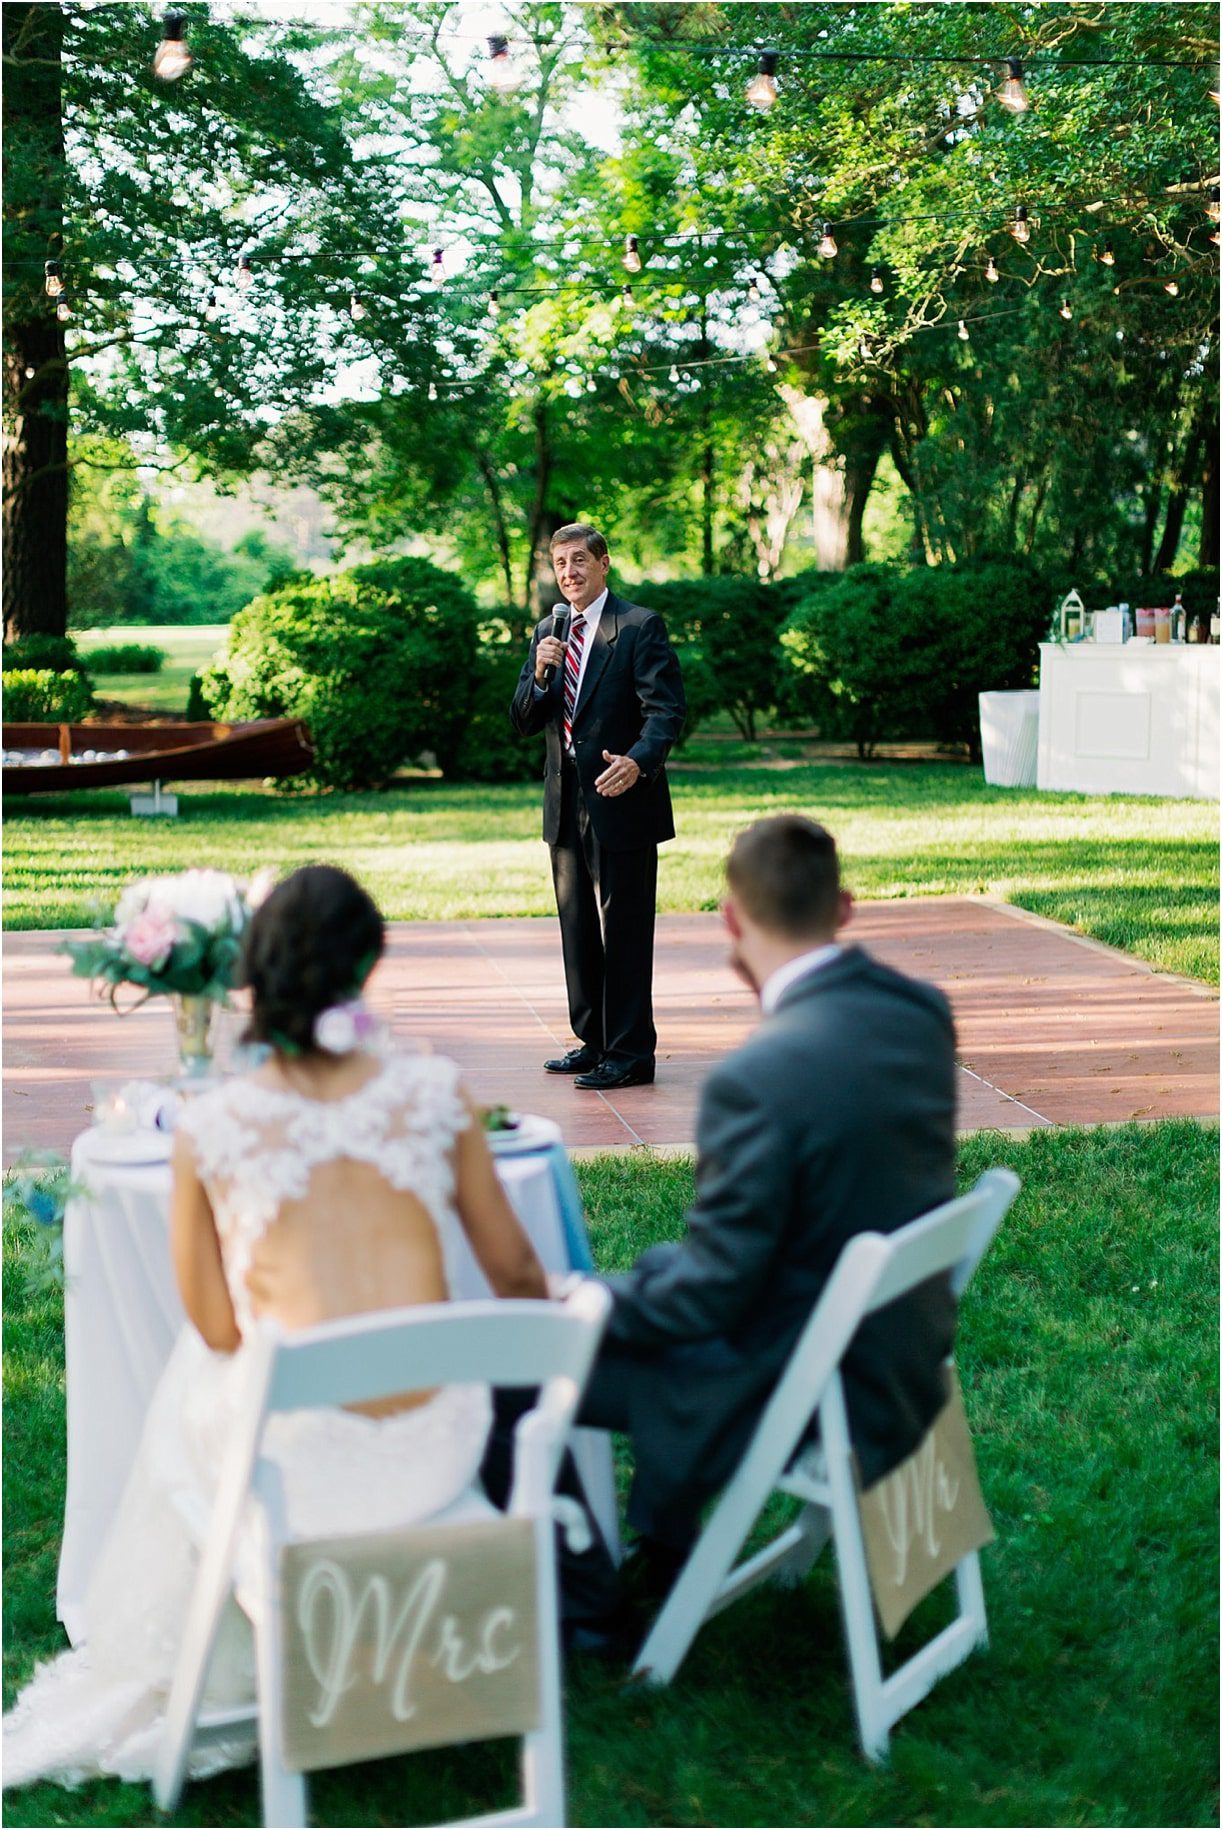 Cape Charles Wedding Venues | Blue Wedding | Hill City Bride Virginia Weddings Blog | Speeches